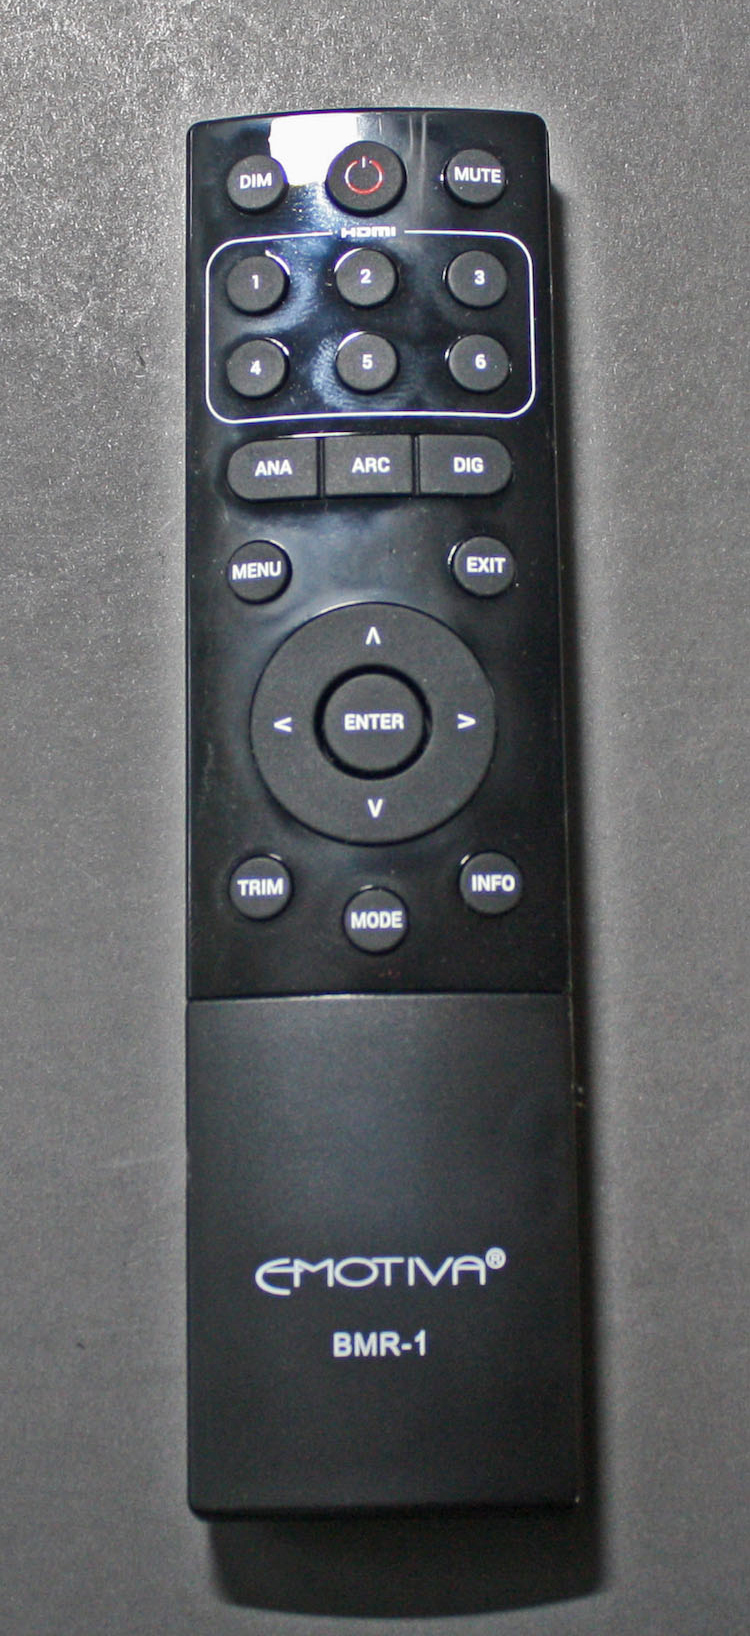 Emotiva BasX Home Theater Audio System - MC-700 Remote